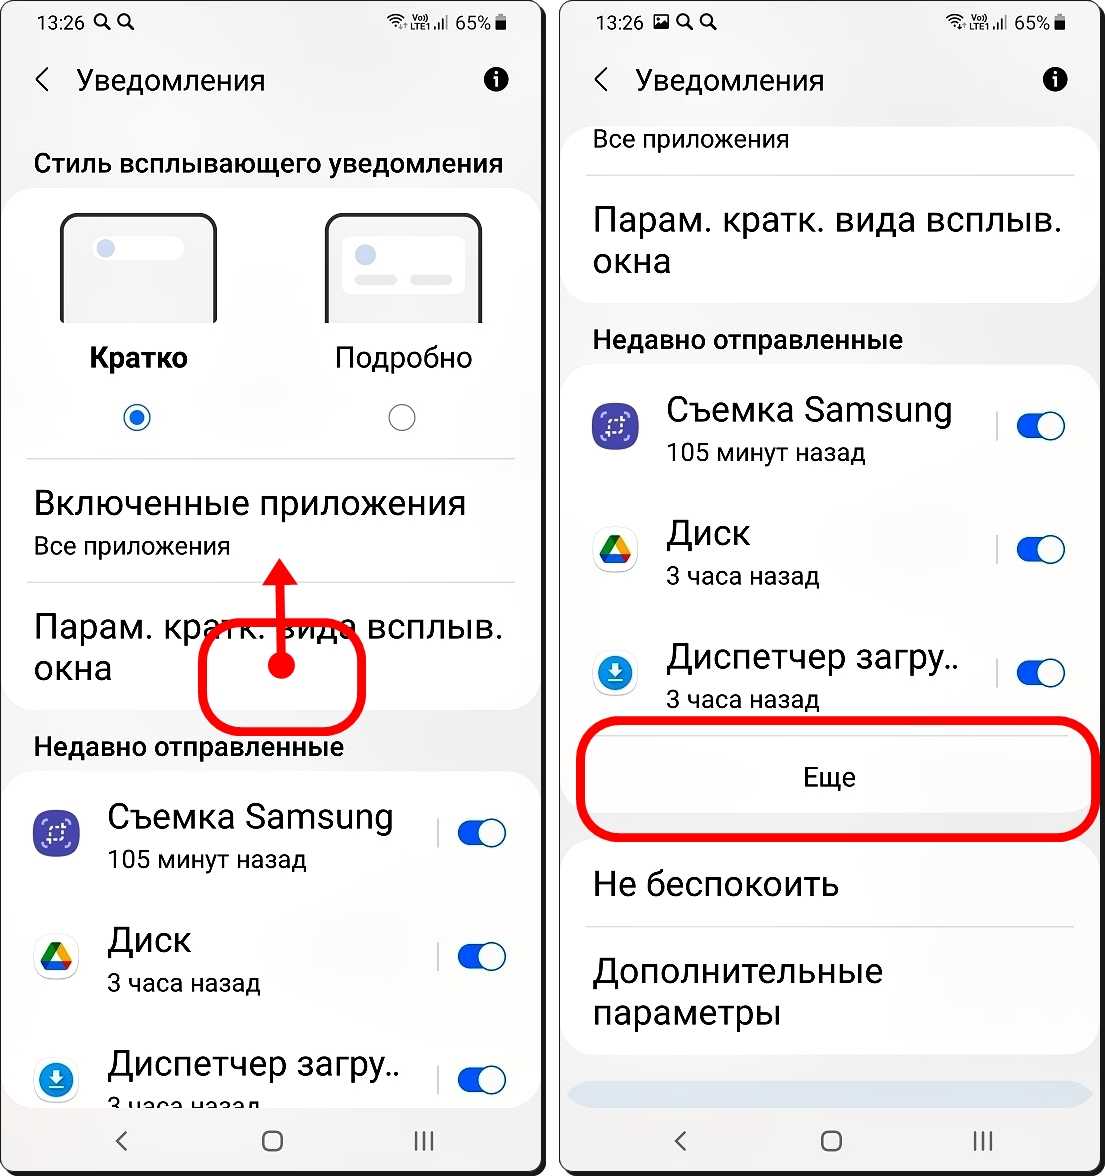 Что означают значки в панели уведомлений на android – подробно обо всех видах значков уведомлений [2019] | softlakecity.ru